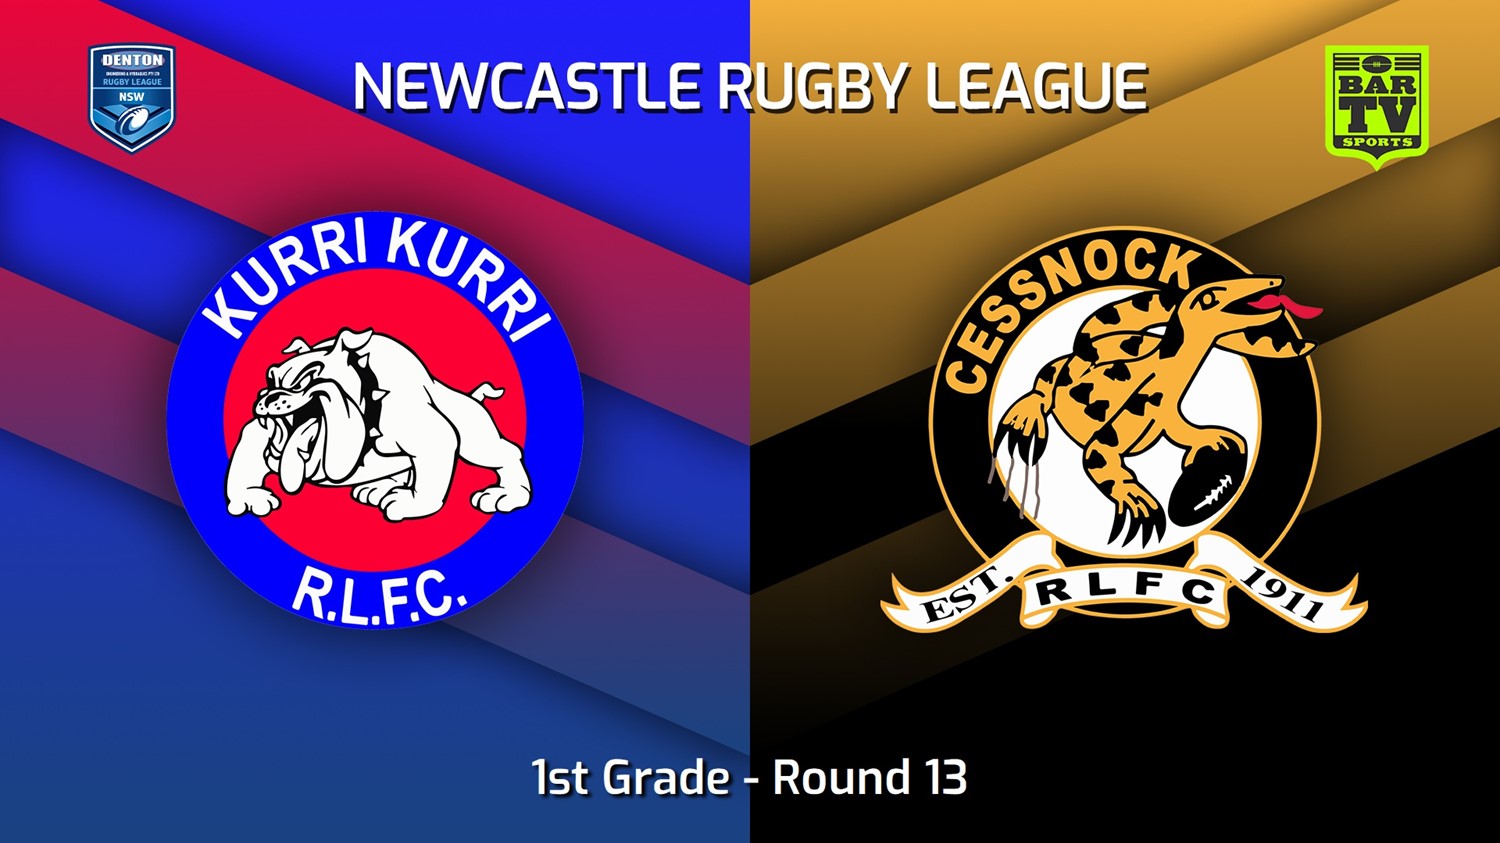 220625-Newcastle Round 13 - 1st Grade - Kurri Kurri Bulldogs v Cessnock Goannas Minigame Slate Image